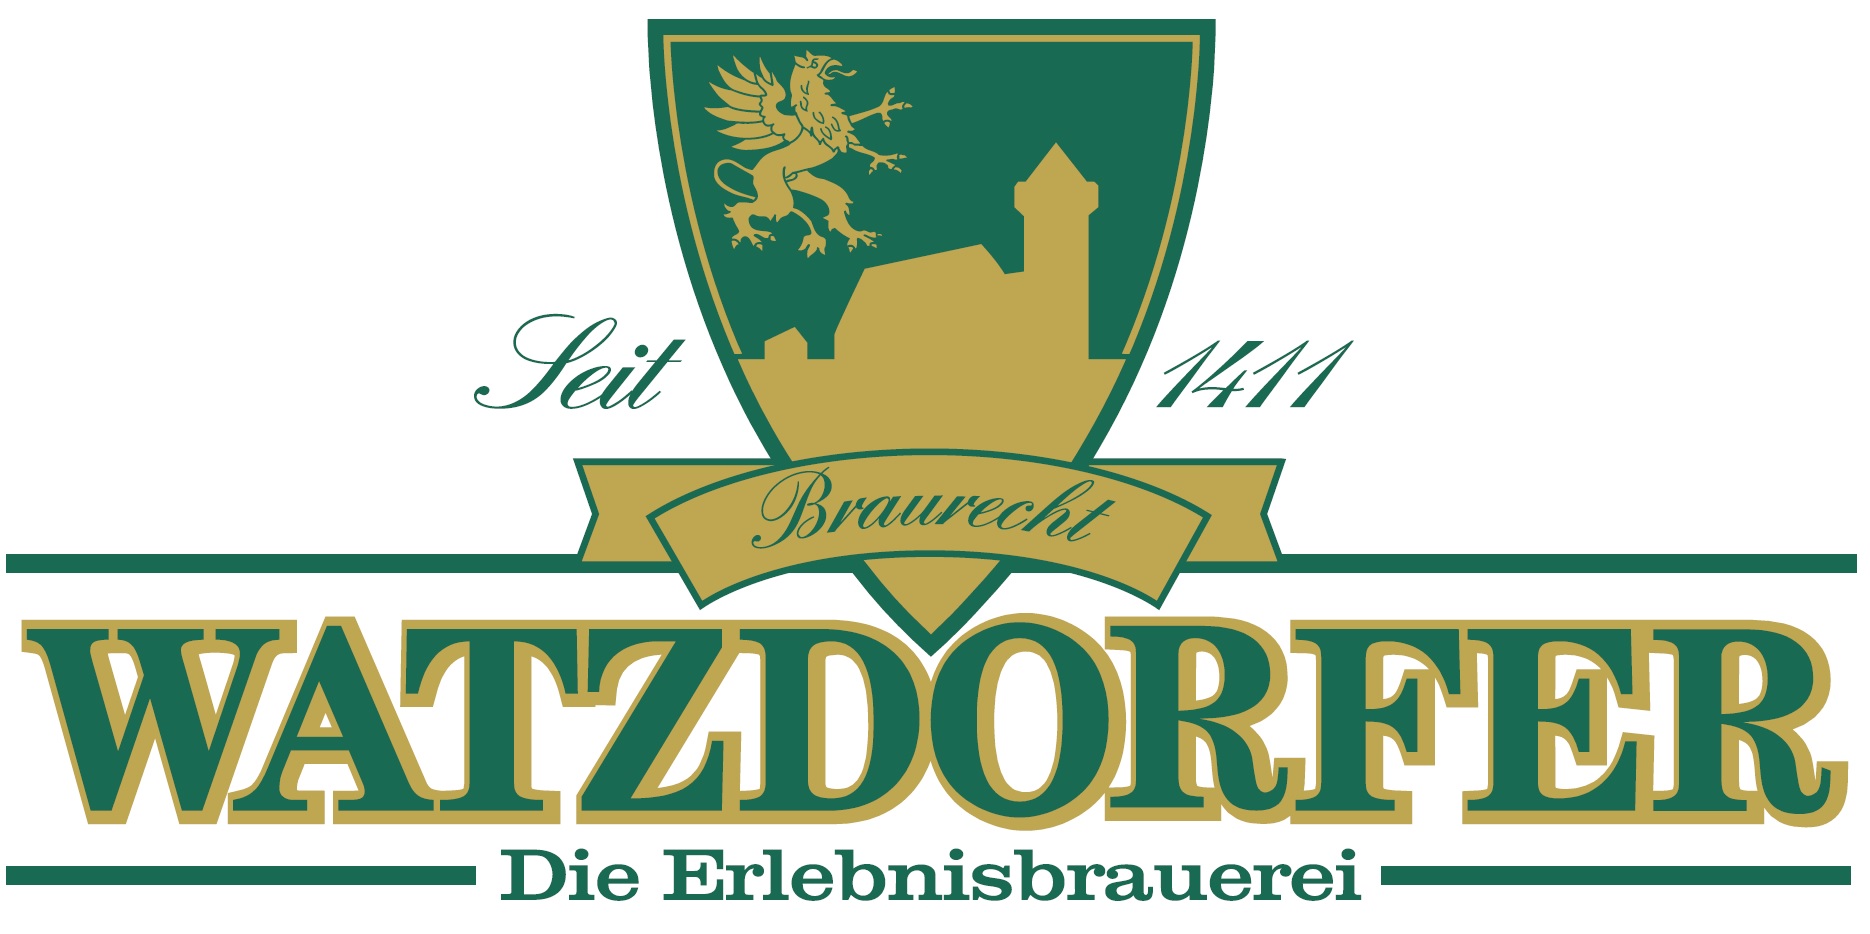 Watzdorfer Brauerei